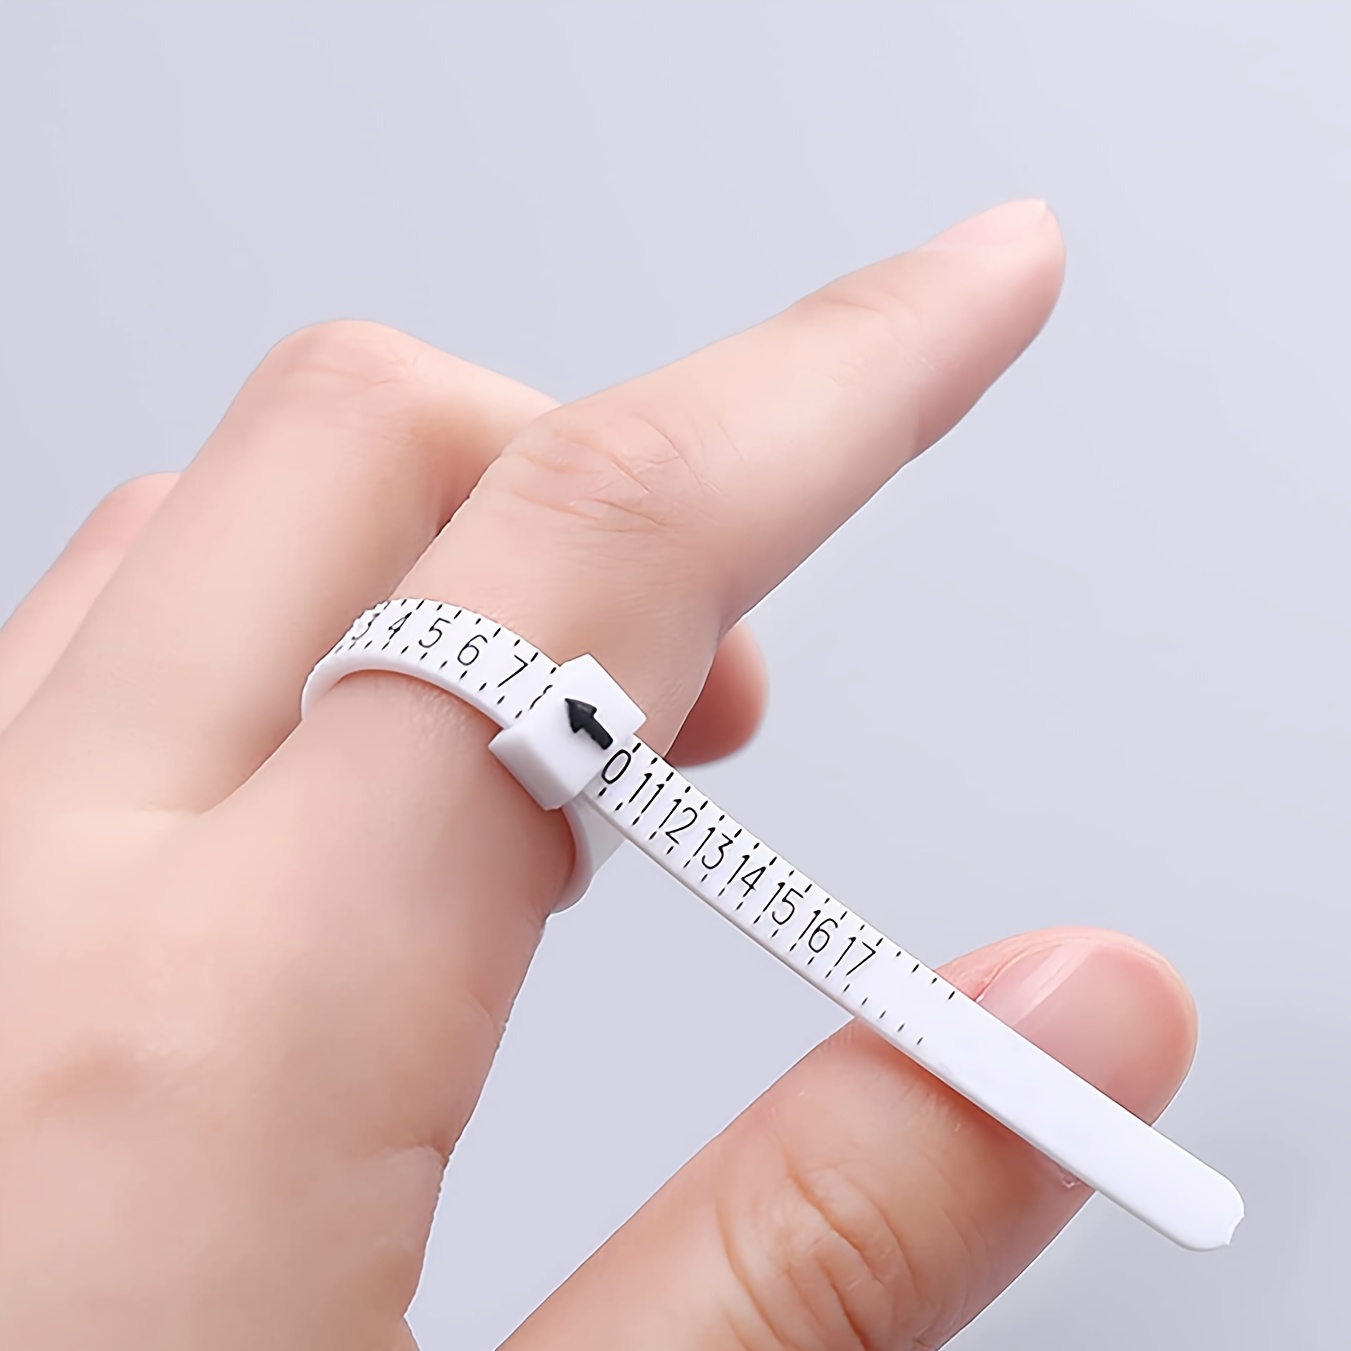 Adjustable Ring Size Finder, Reusable at Home Ring Measurement